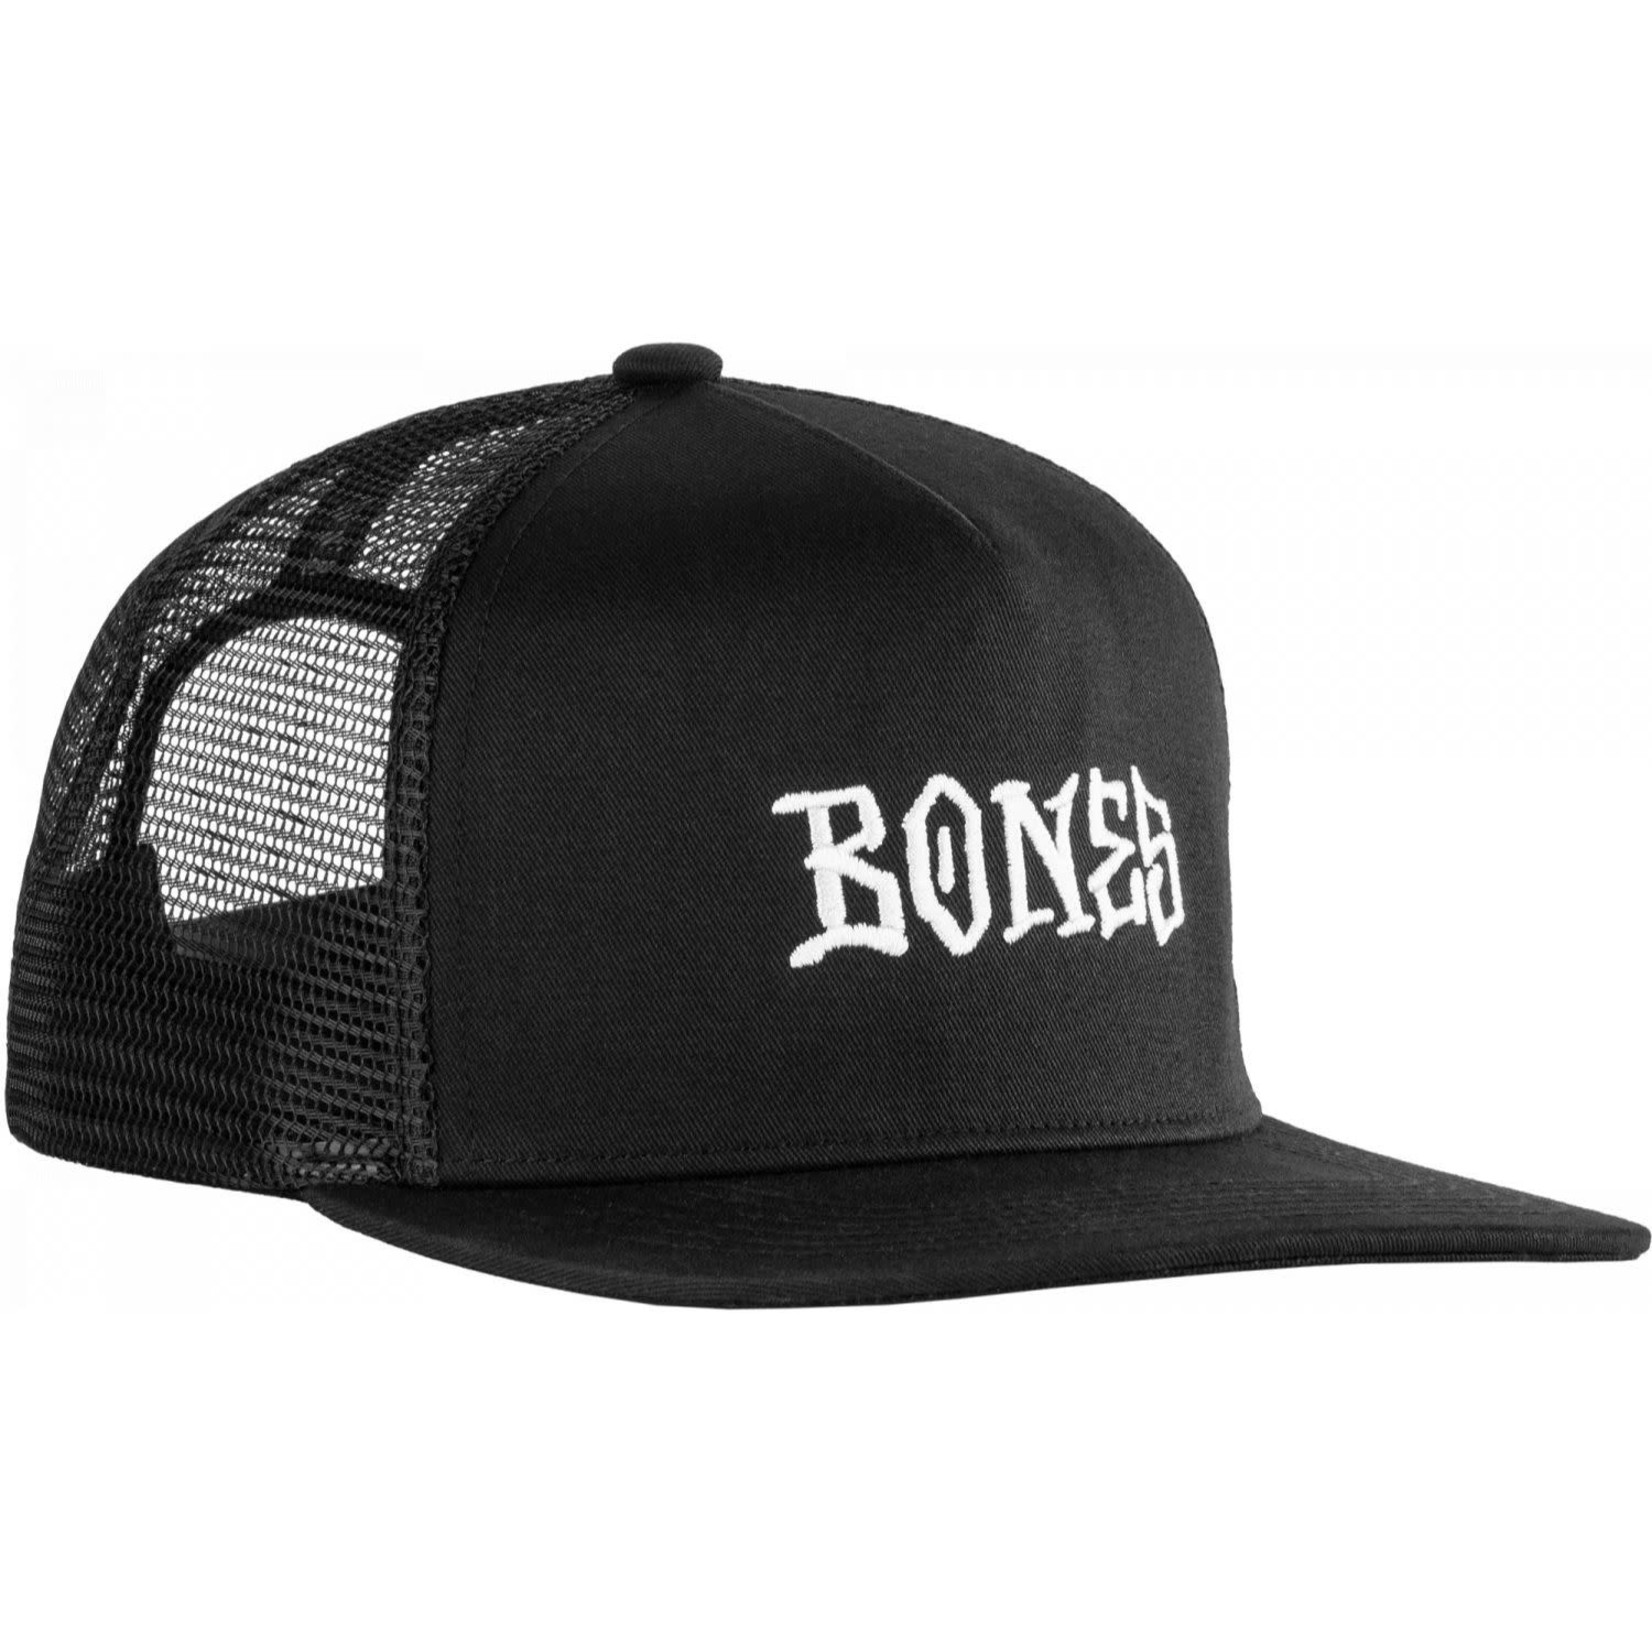 Bones Bones Wheels Trucker Stitch Hat - Black